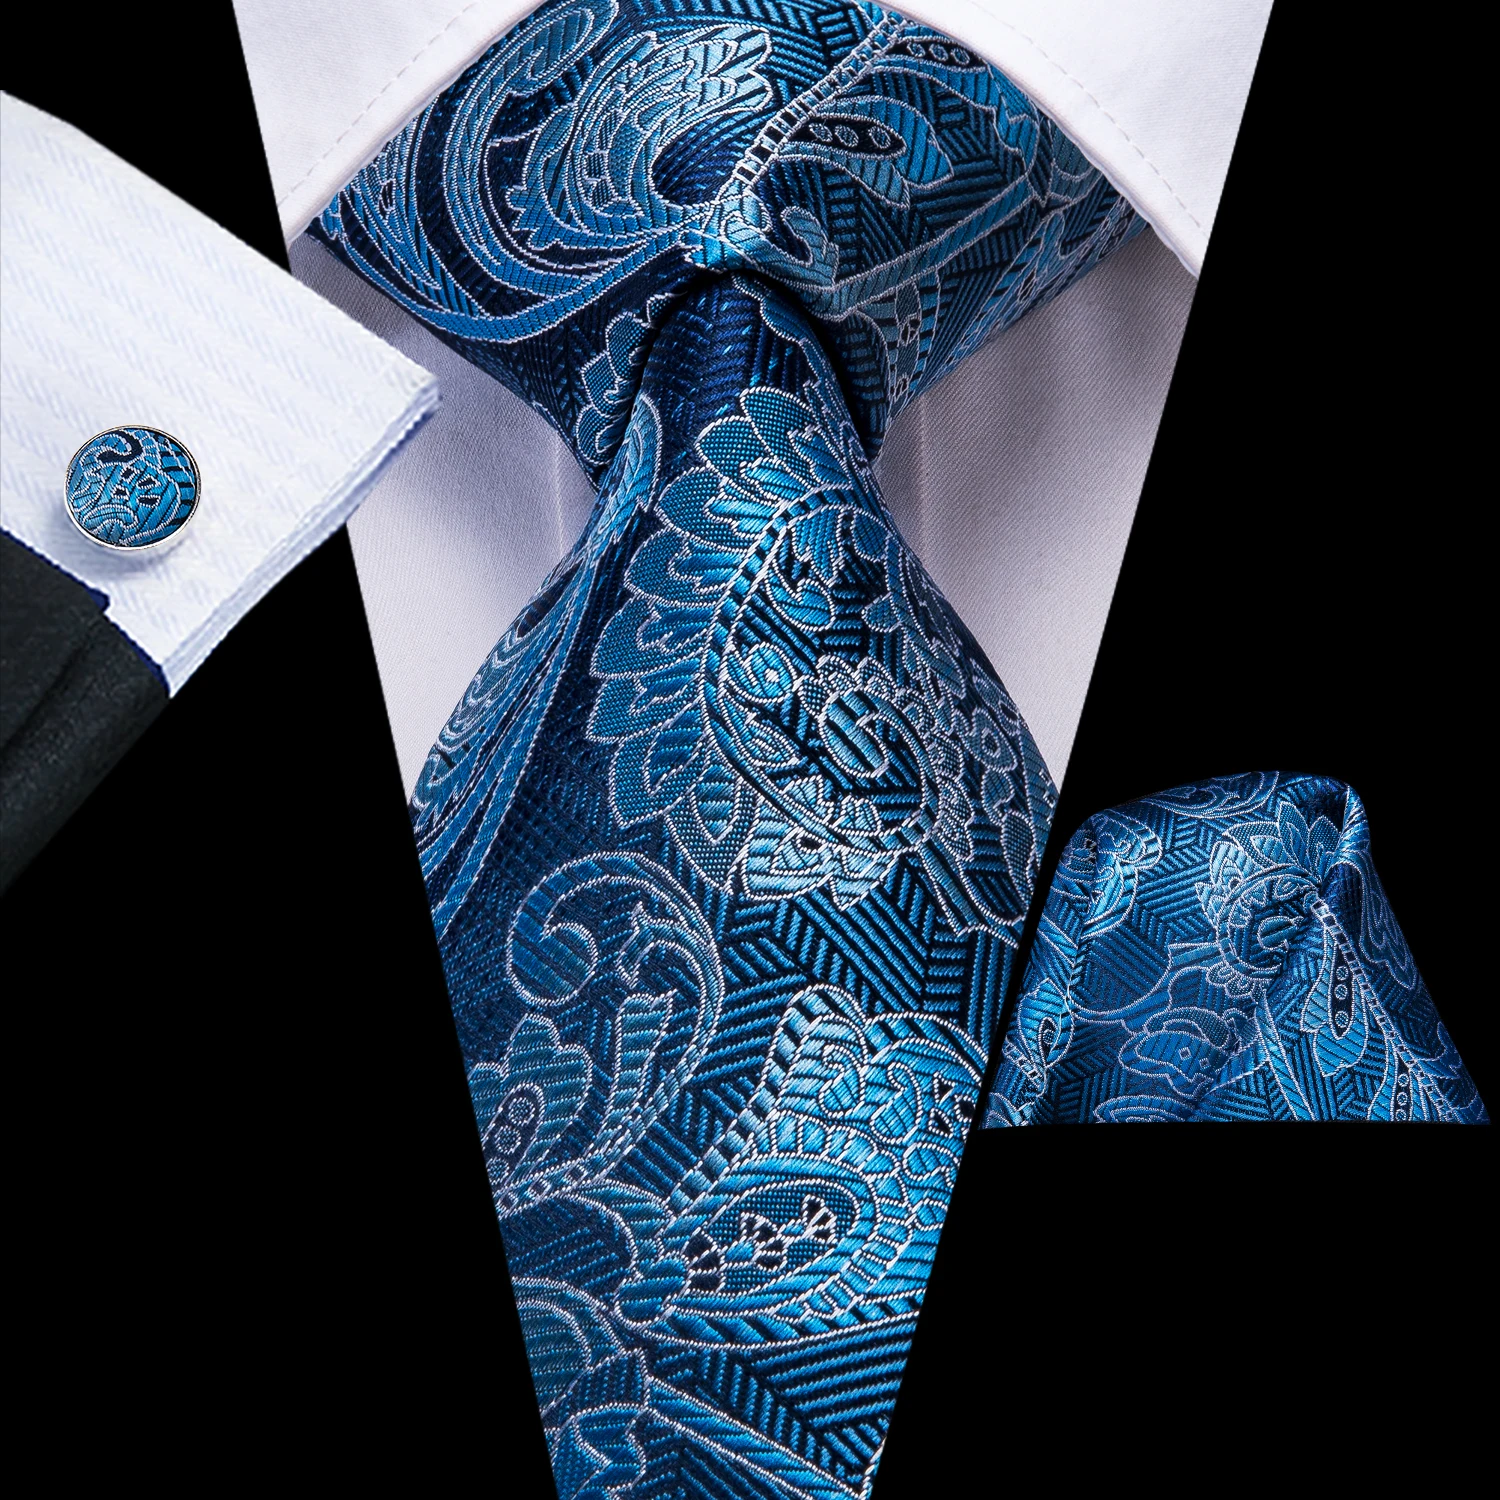 Lord R Colton Studio Tie Navy Blue Clover Printed Necktie $95 Retail New 